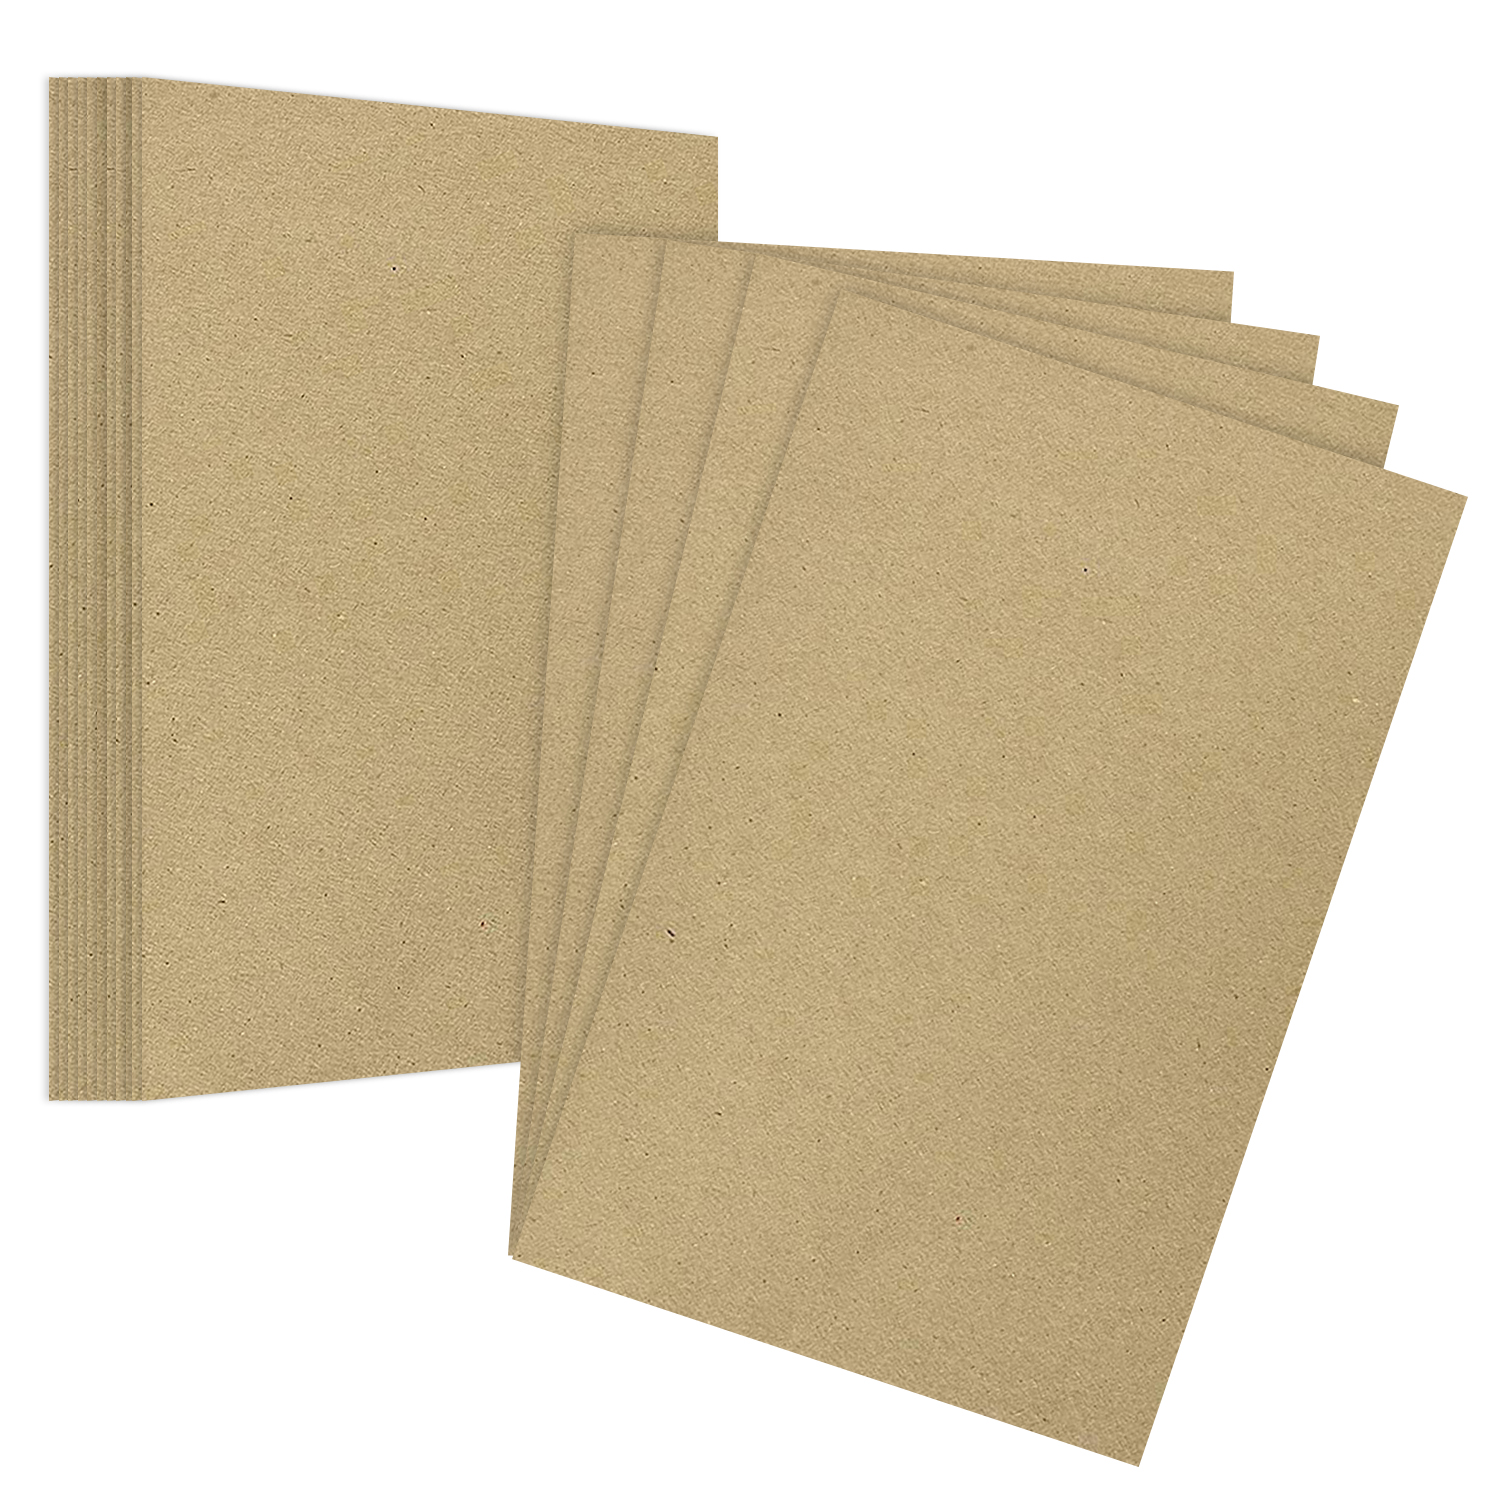 25 Sheets Chipboard 11 x 17 inch 30pt Medium Weight Brown Kraft Cardboard 